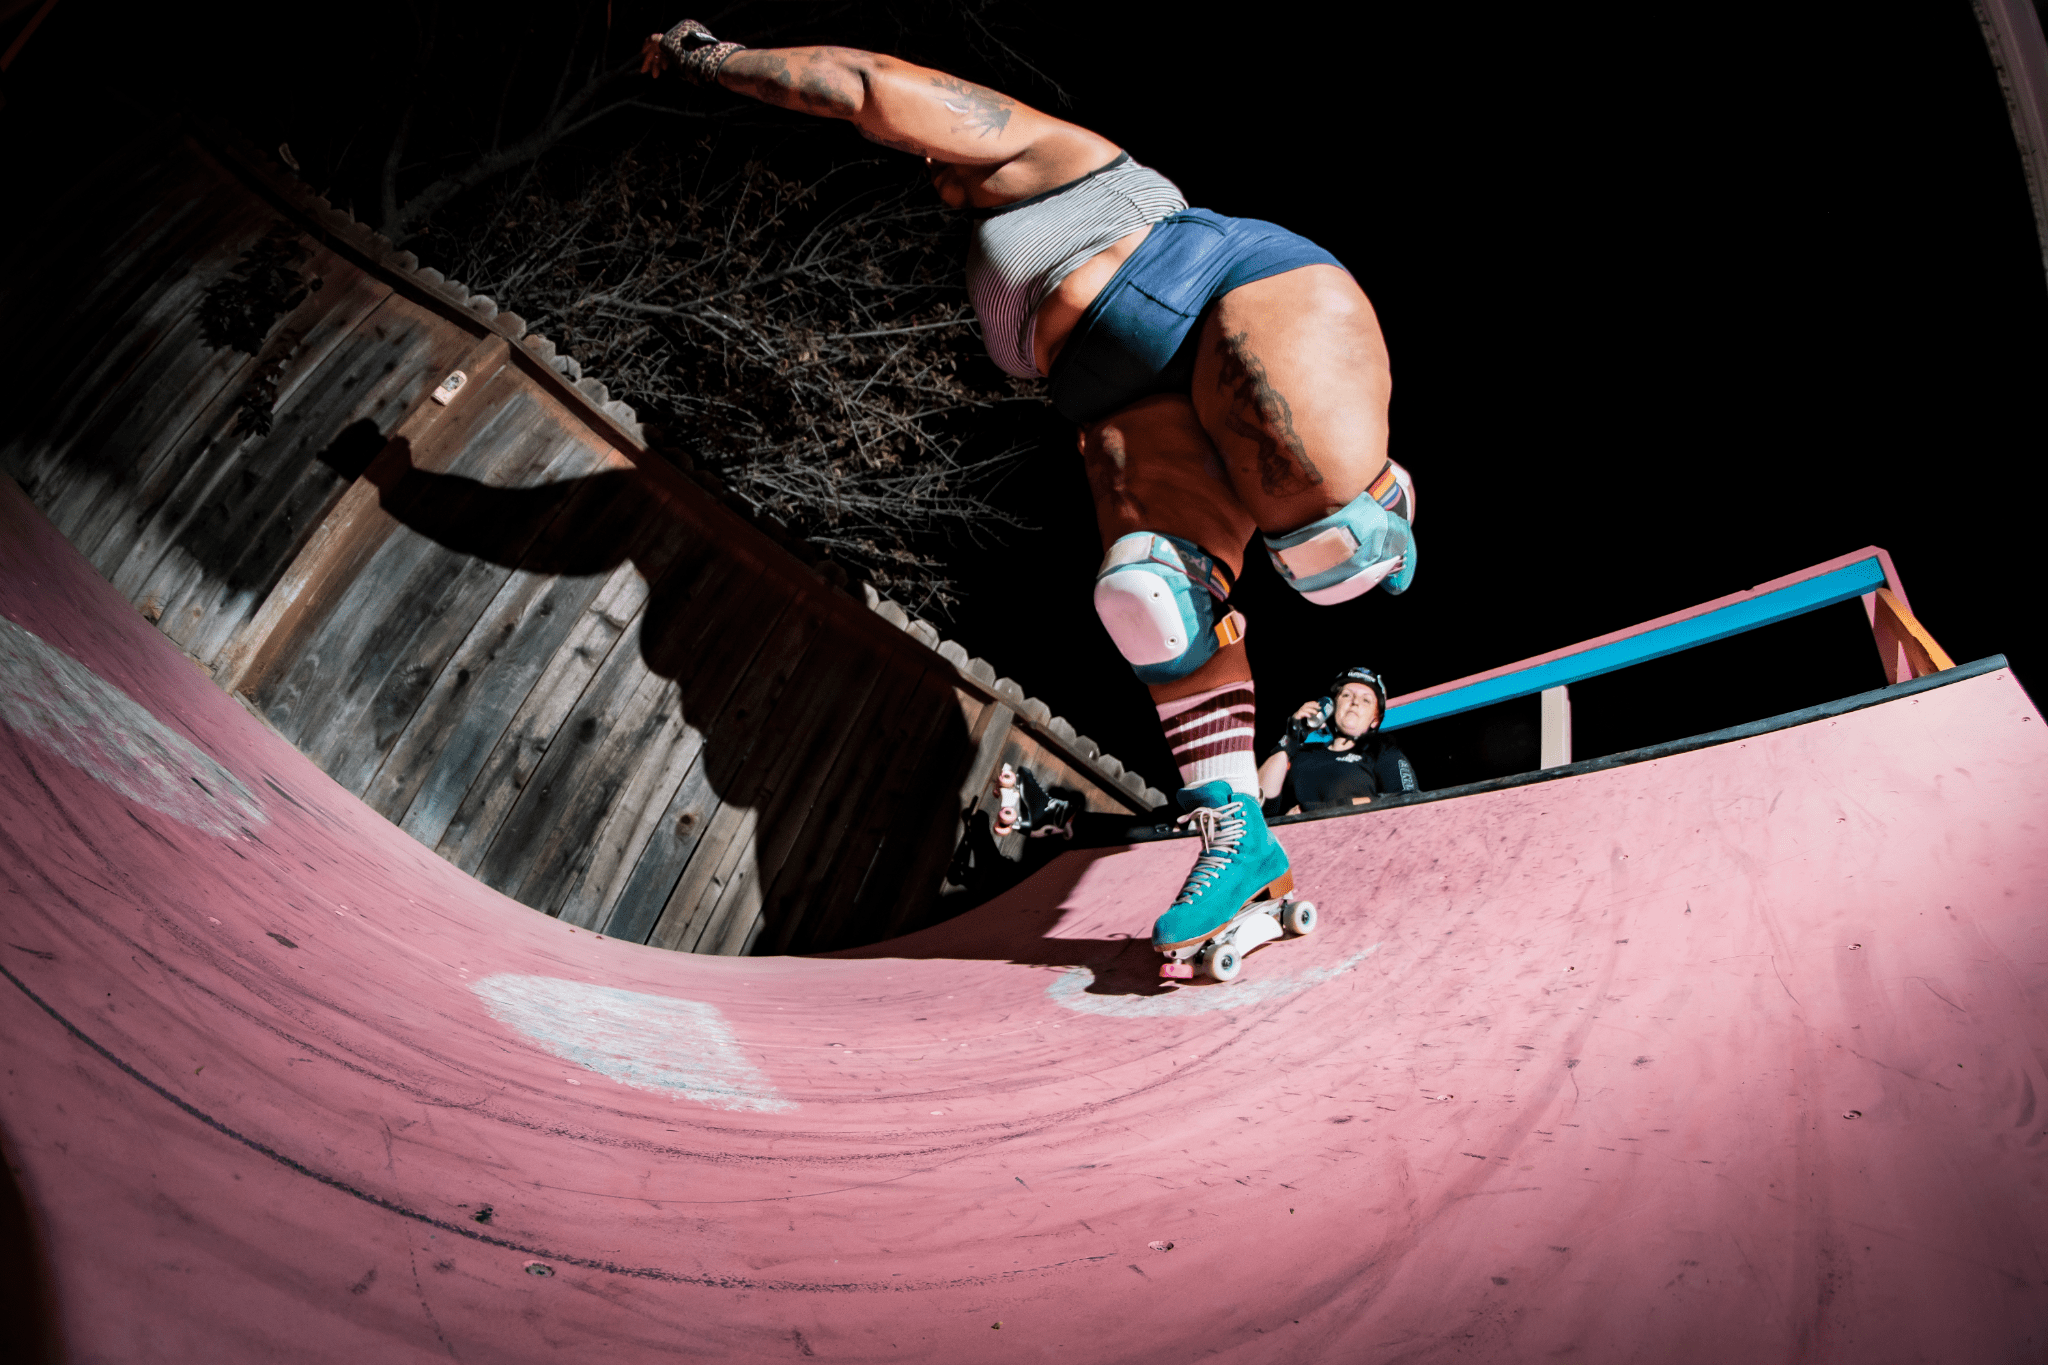 CIB Roller Skate Slide and Grind Blocks – Seaside Skates